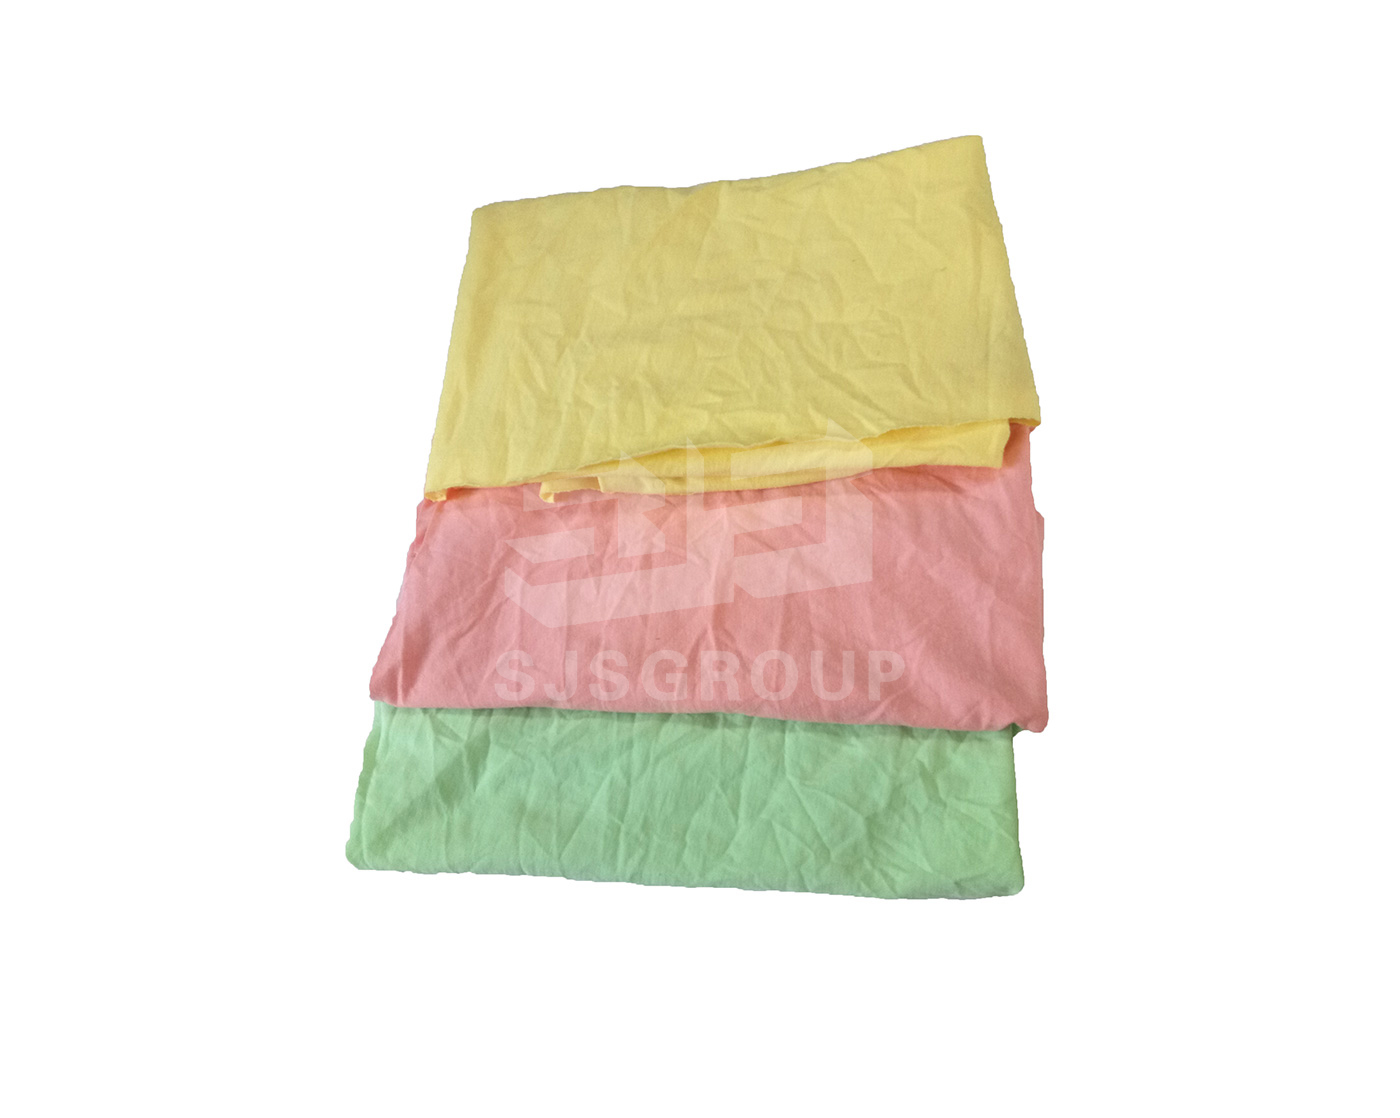 New Color Cotton Rags-Light color cotton rags new (Regular Size)